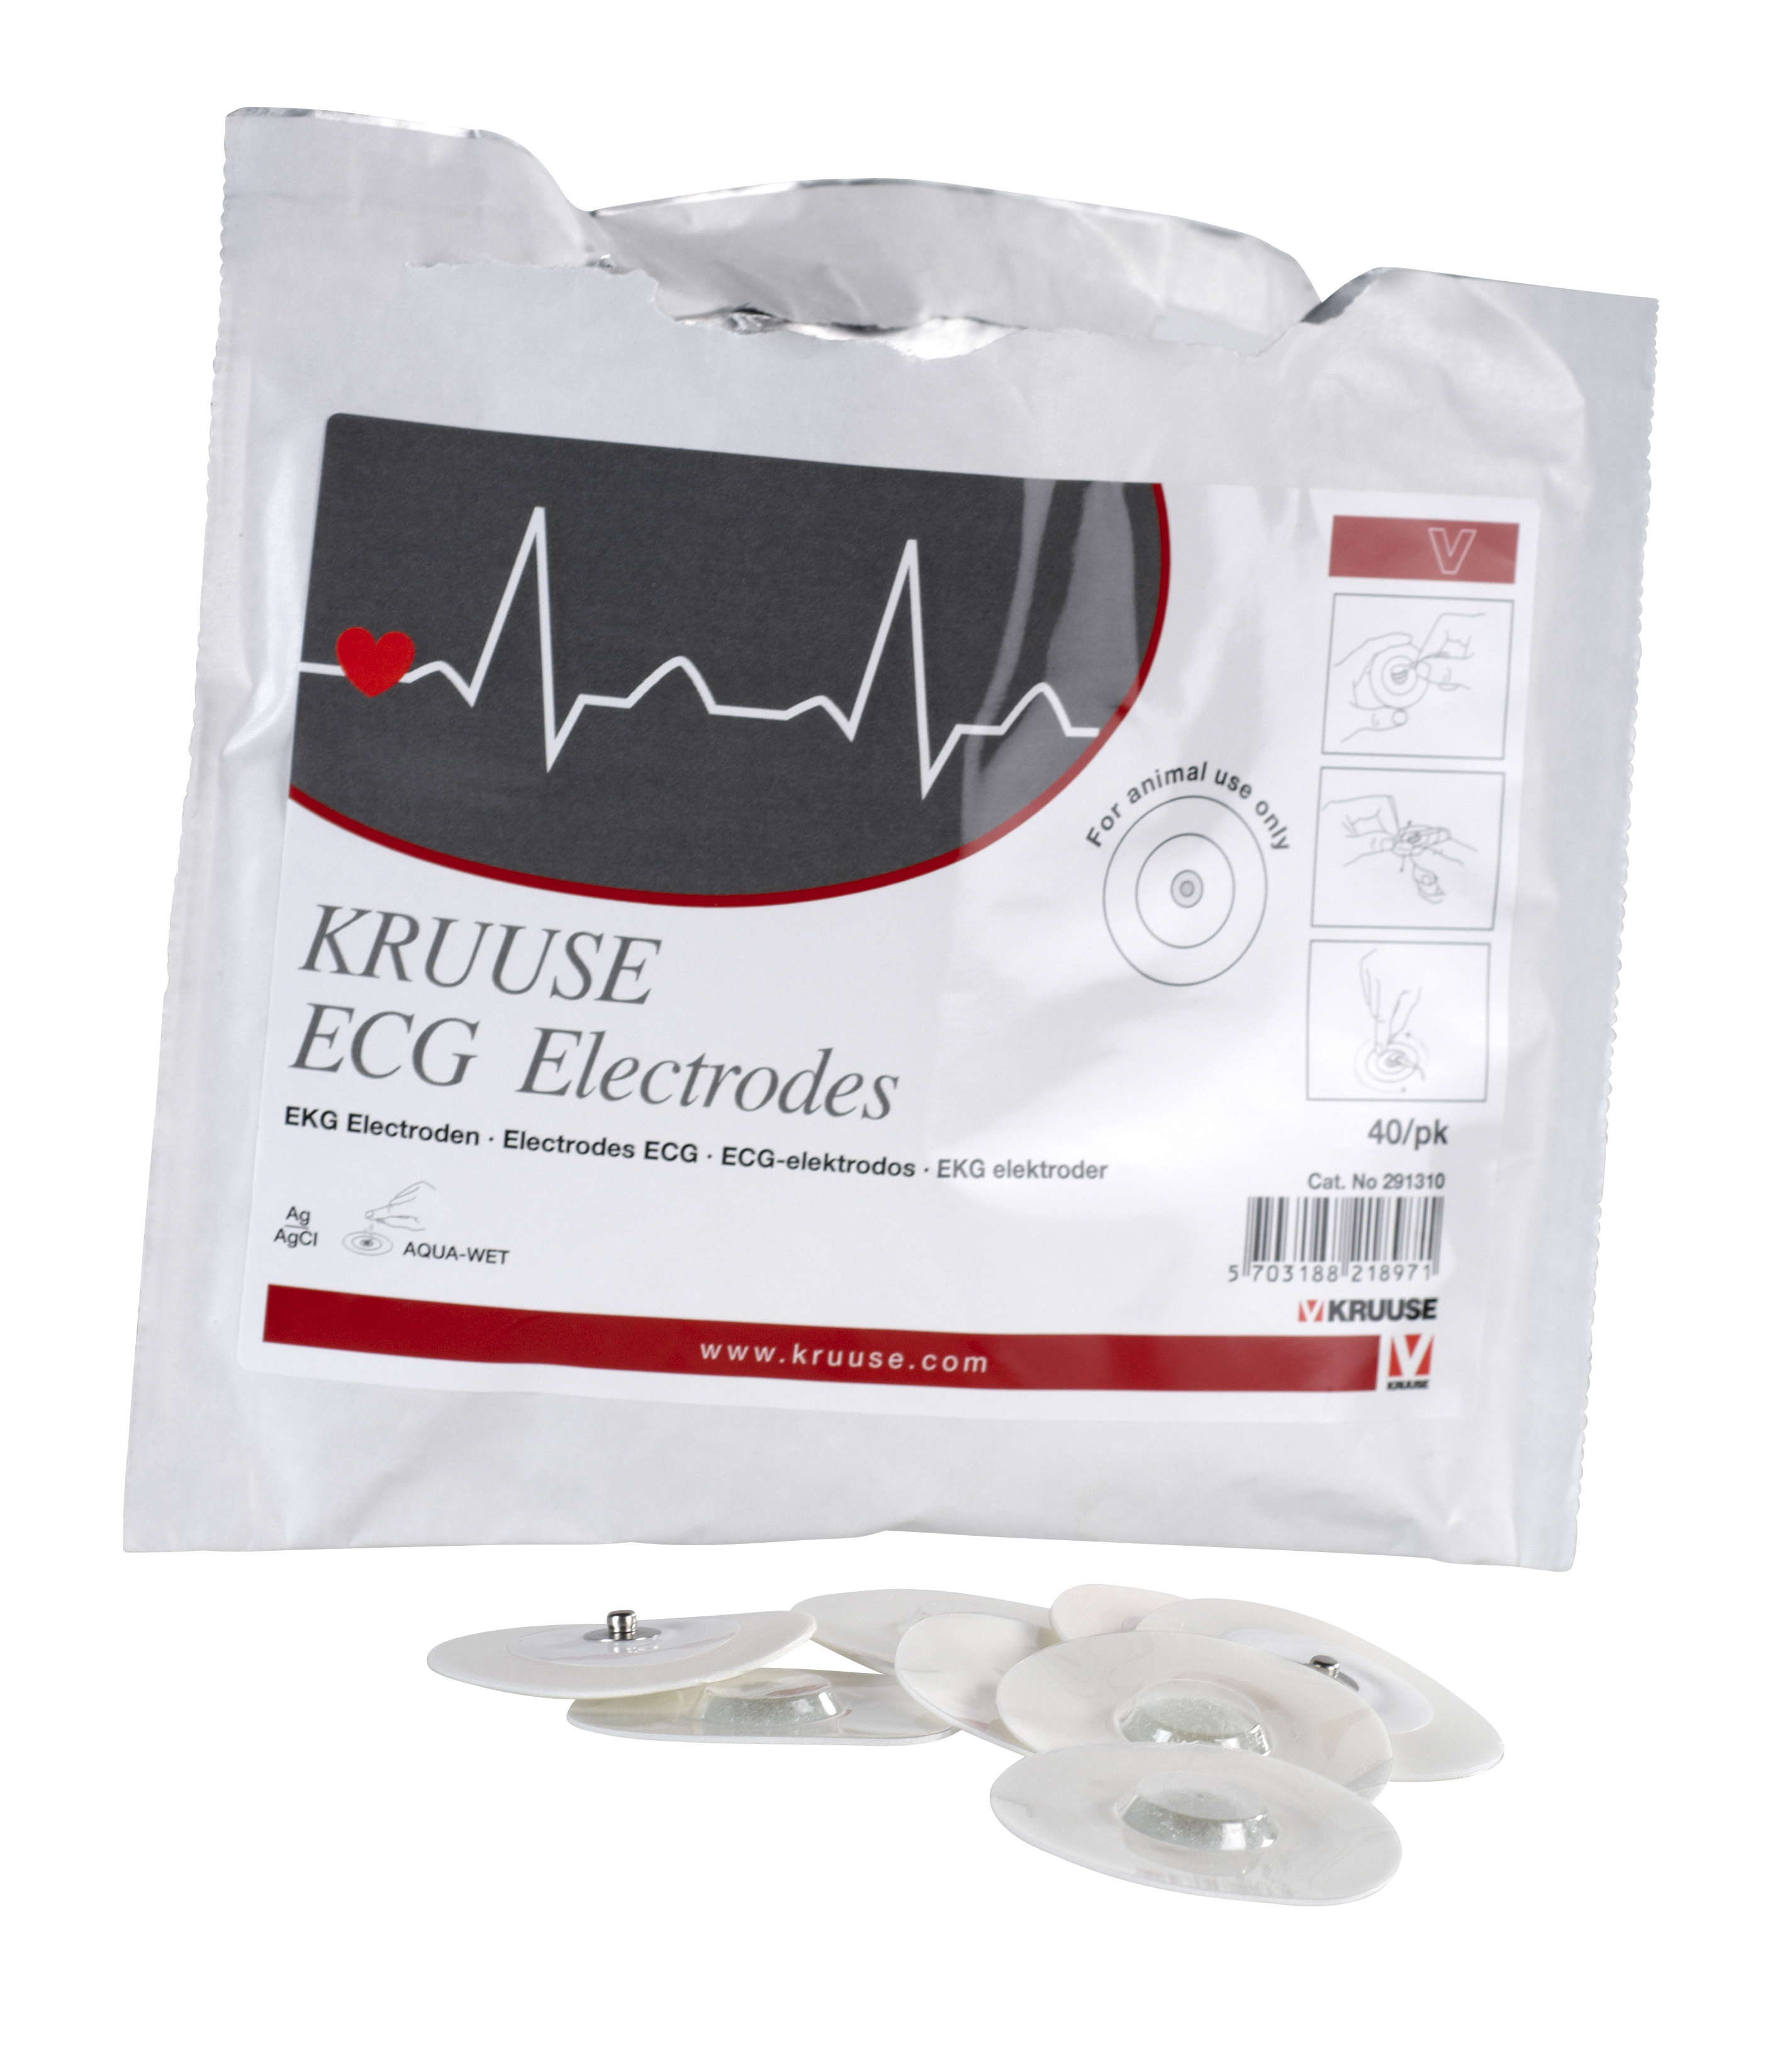 KRUUSE ECG Electrodes, 40/pk